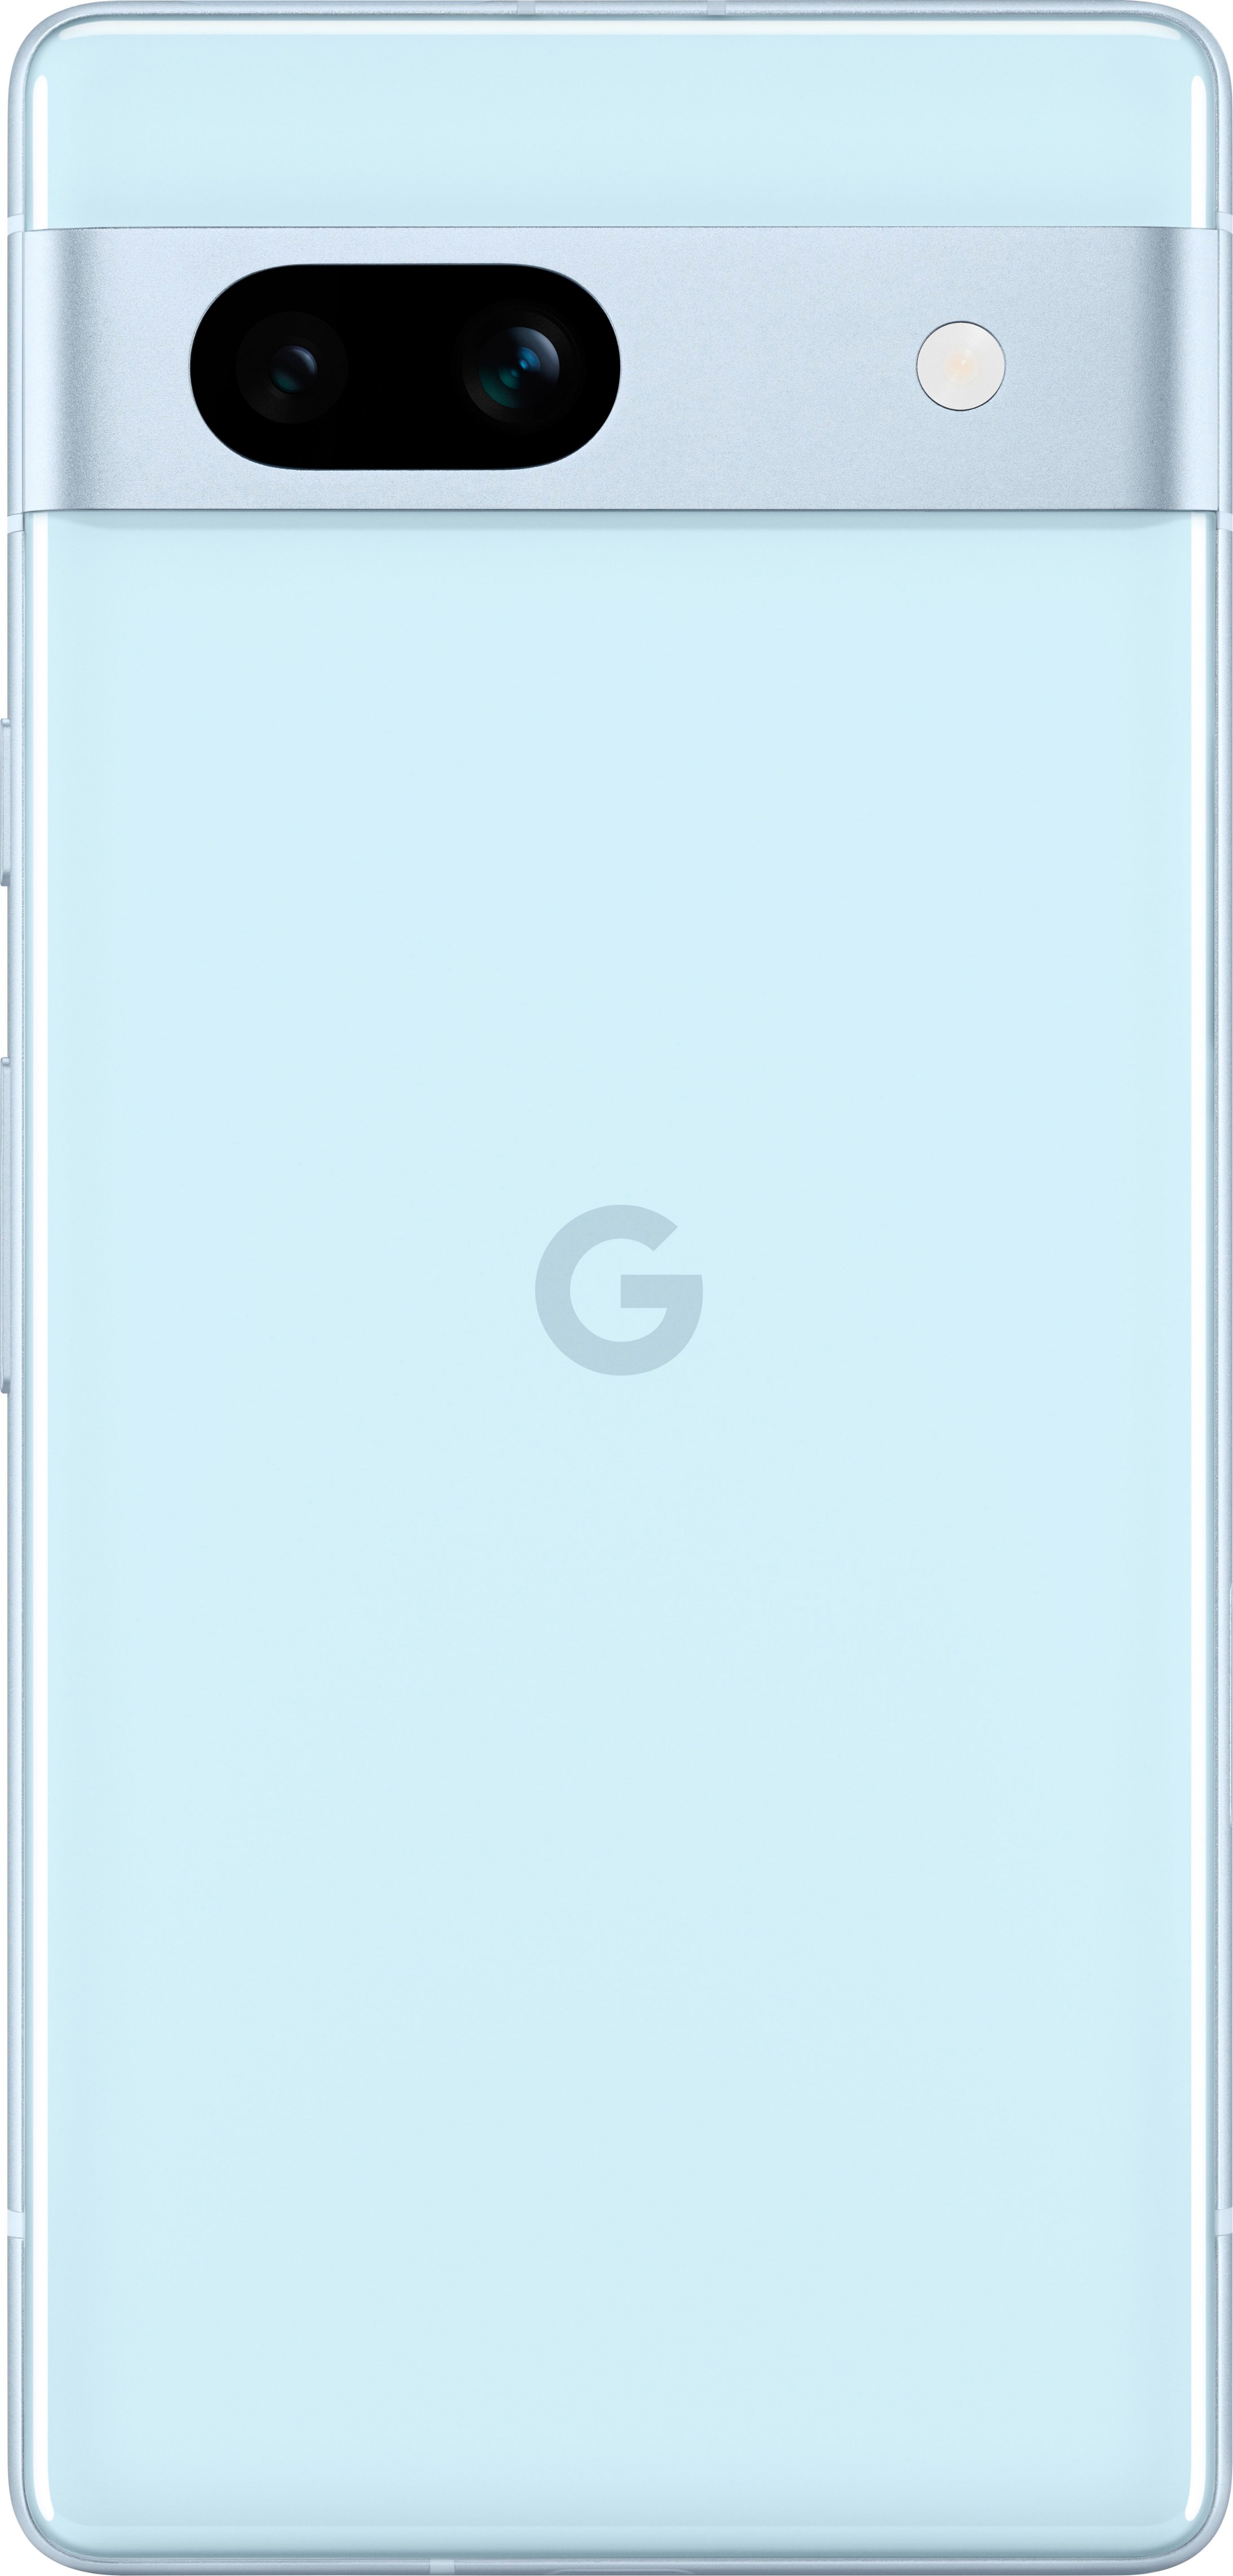 Google Pixel 7a Case Charcoal GA04318 - Best Buy